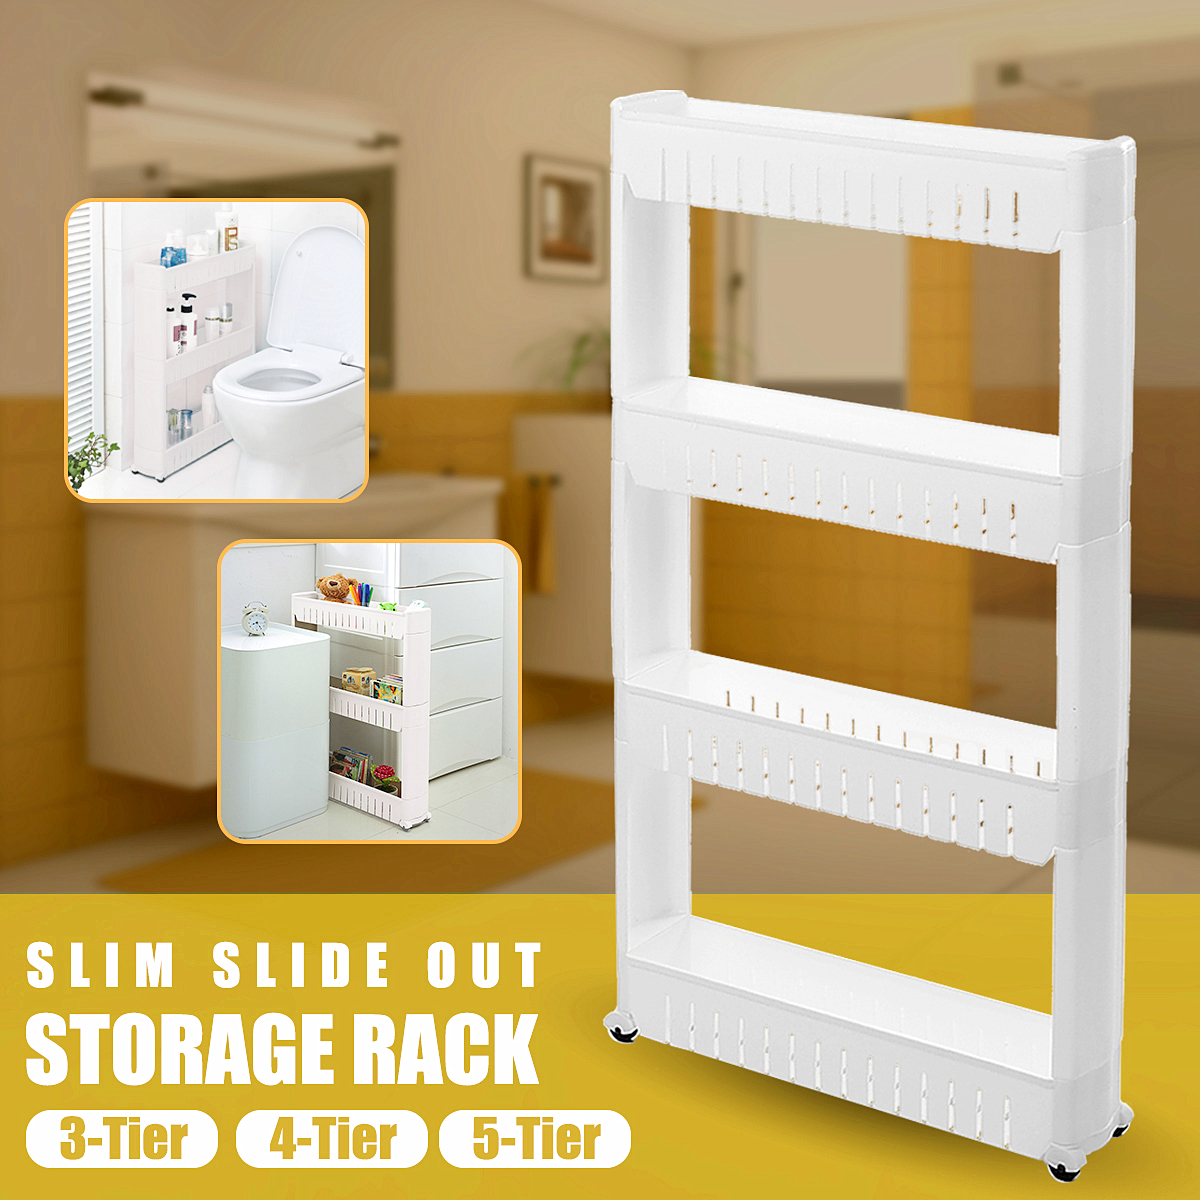 345-Tier-Slim-Slide-Out-Trolley-Storage-Holder-Rack-Organiser-Kitchen-Bathroom-1696979-3